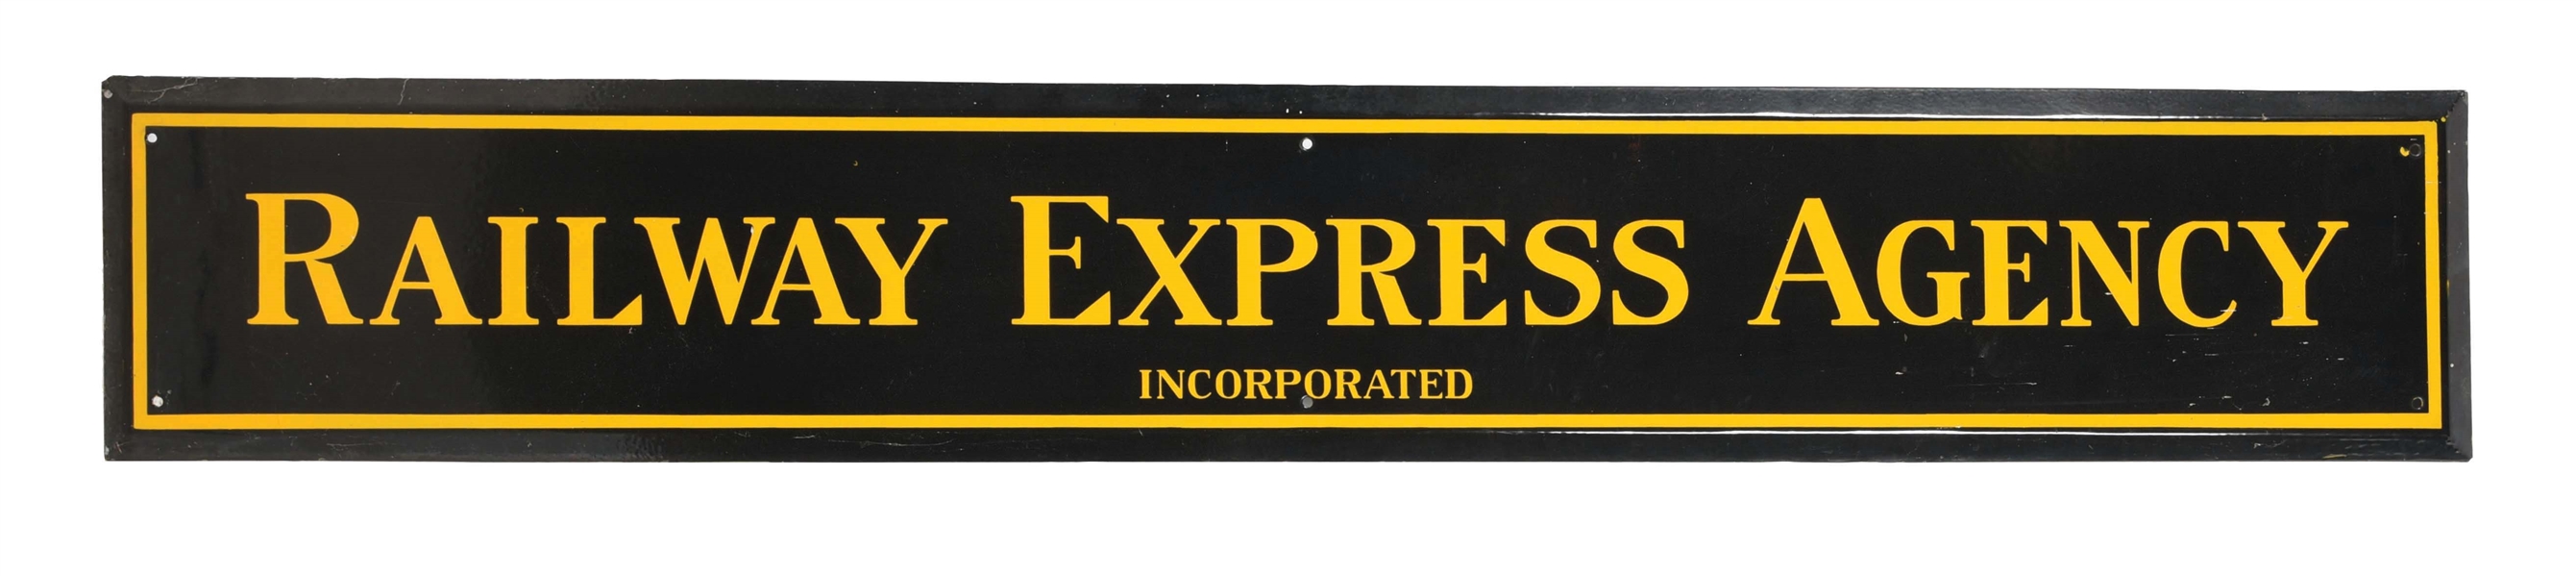 RAILWAY EXPRESS AGENCY PORCELAIN DEPOT SIGN W/ SELF FRAMED EDGE. 